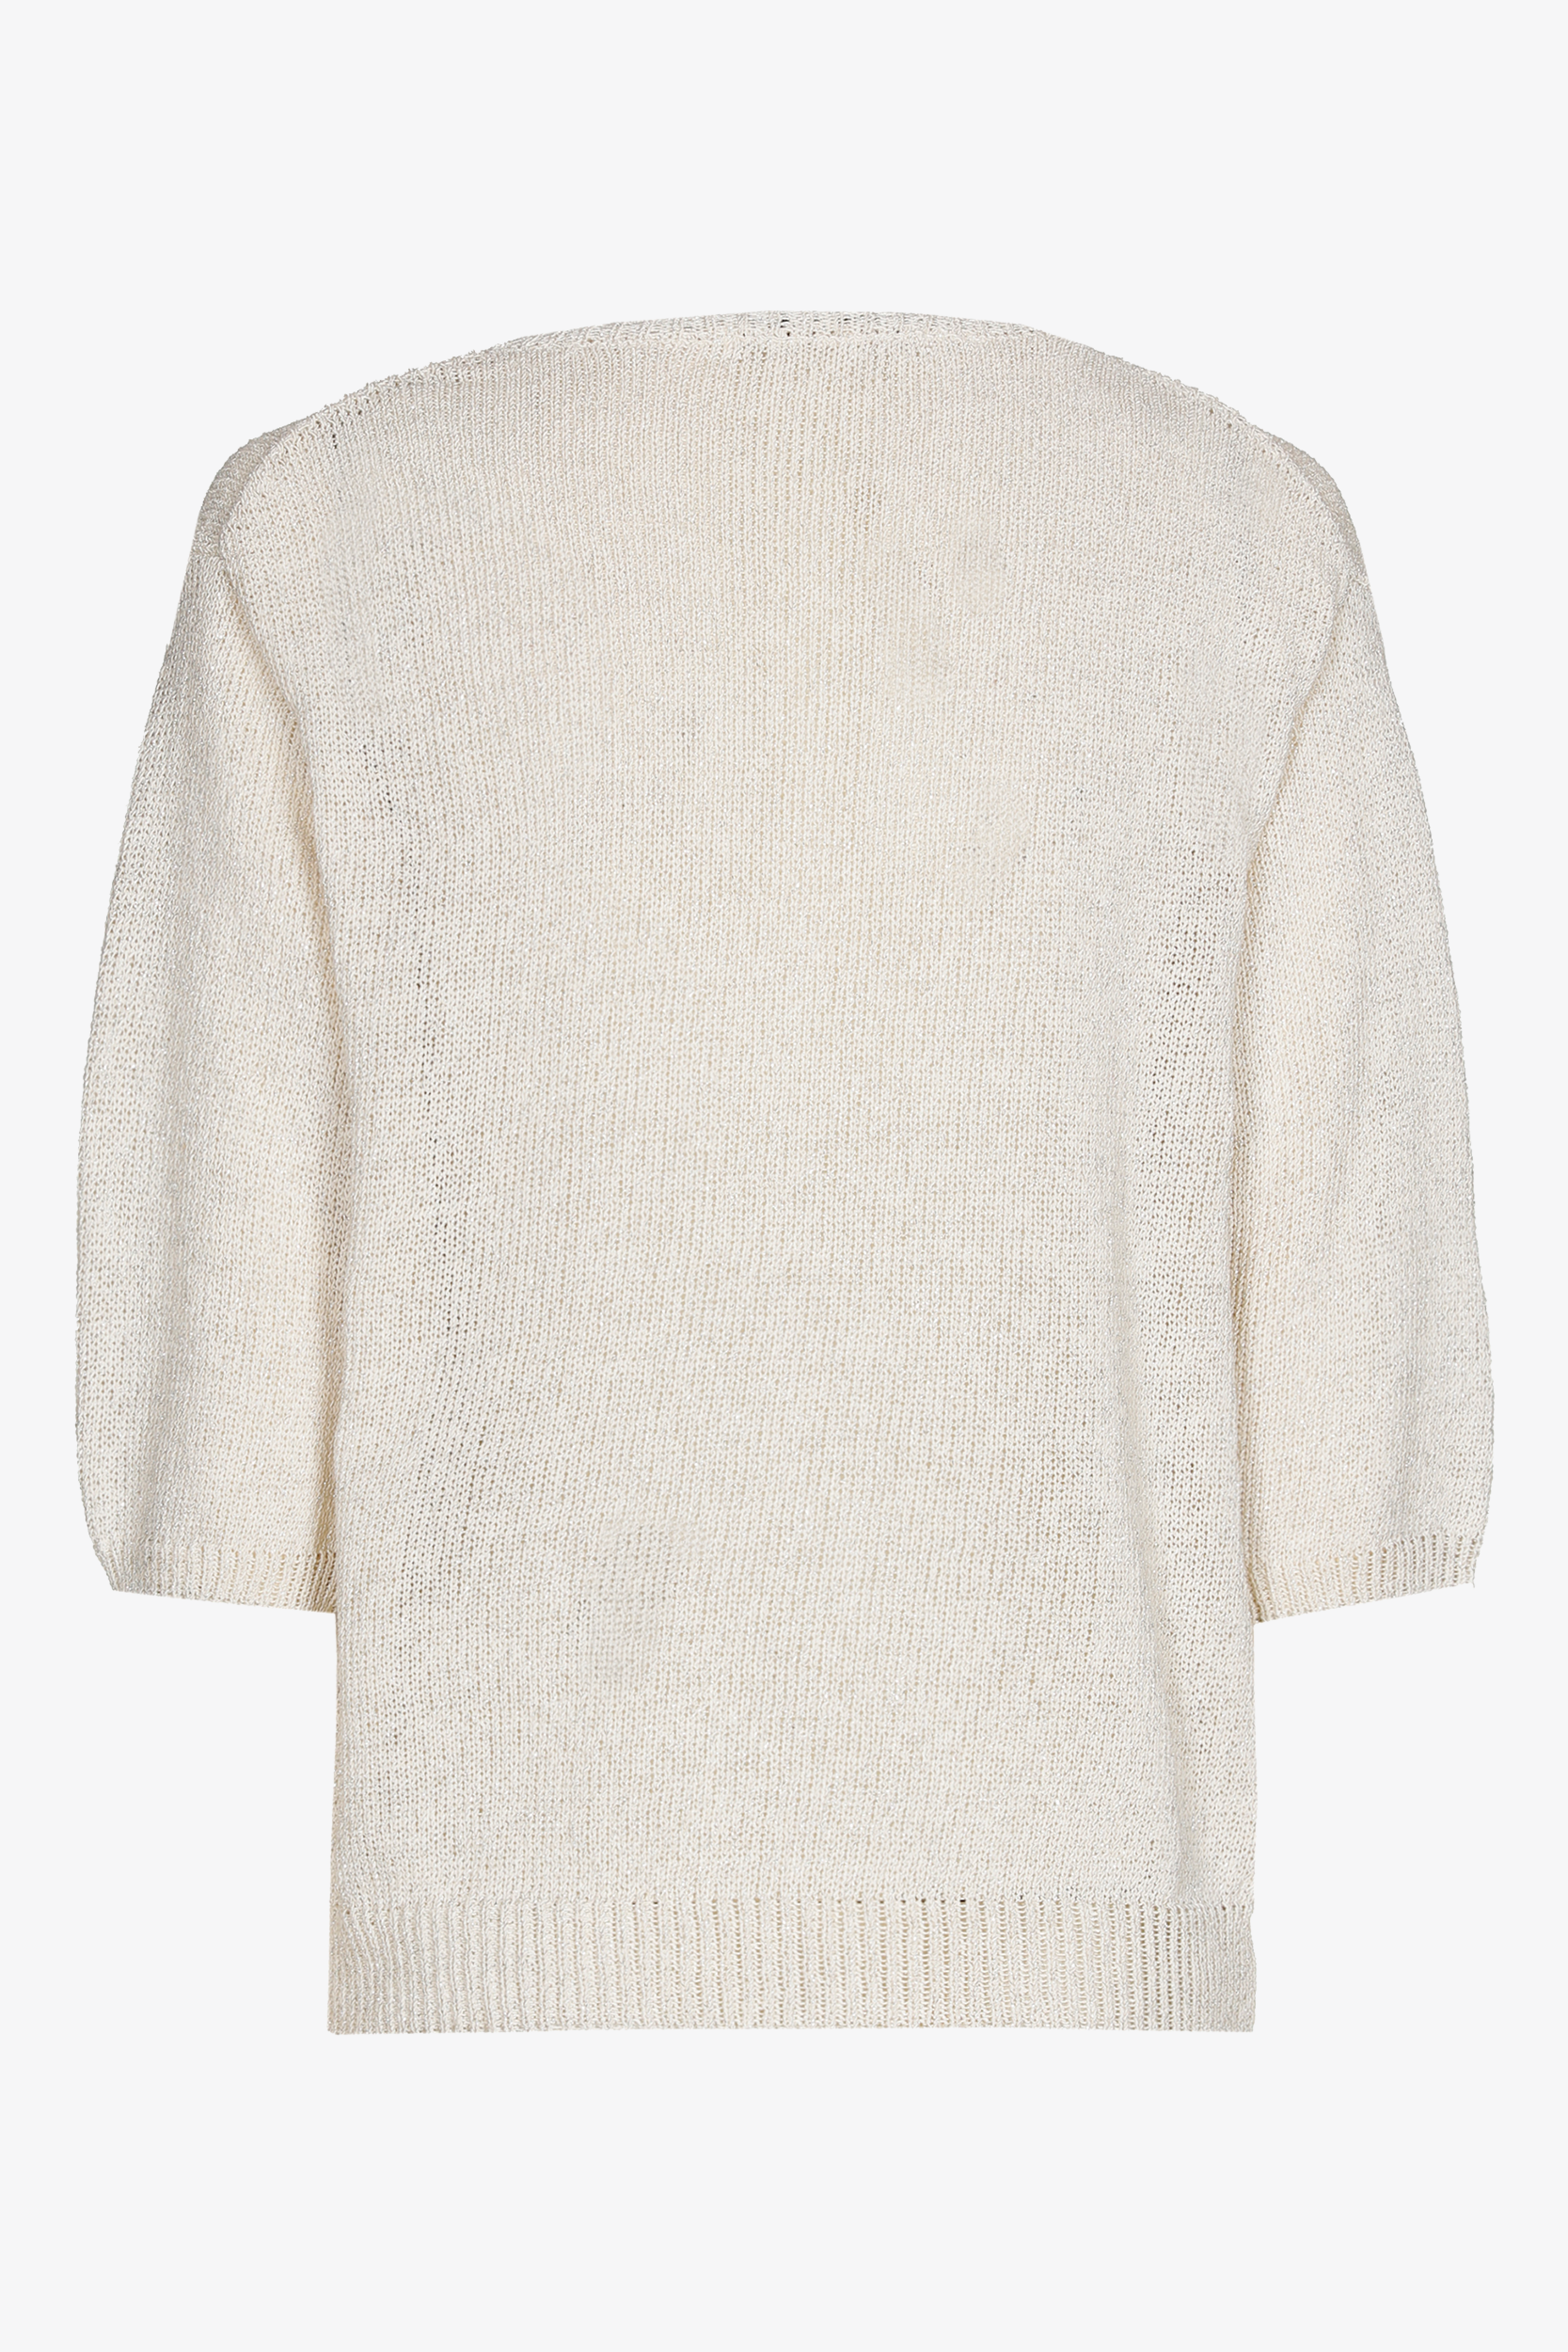 Loose-knit cotton jumper